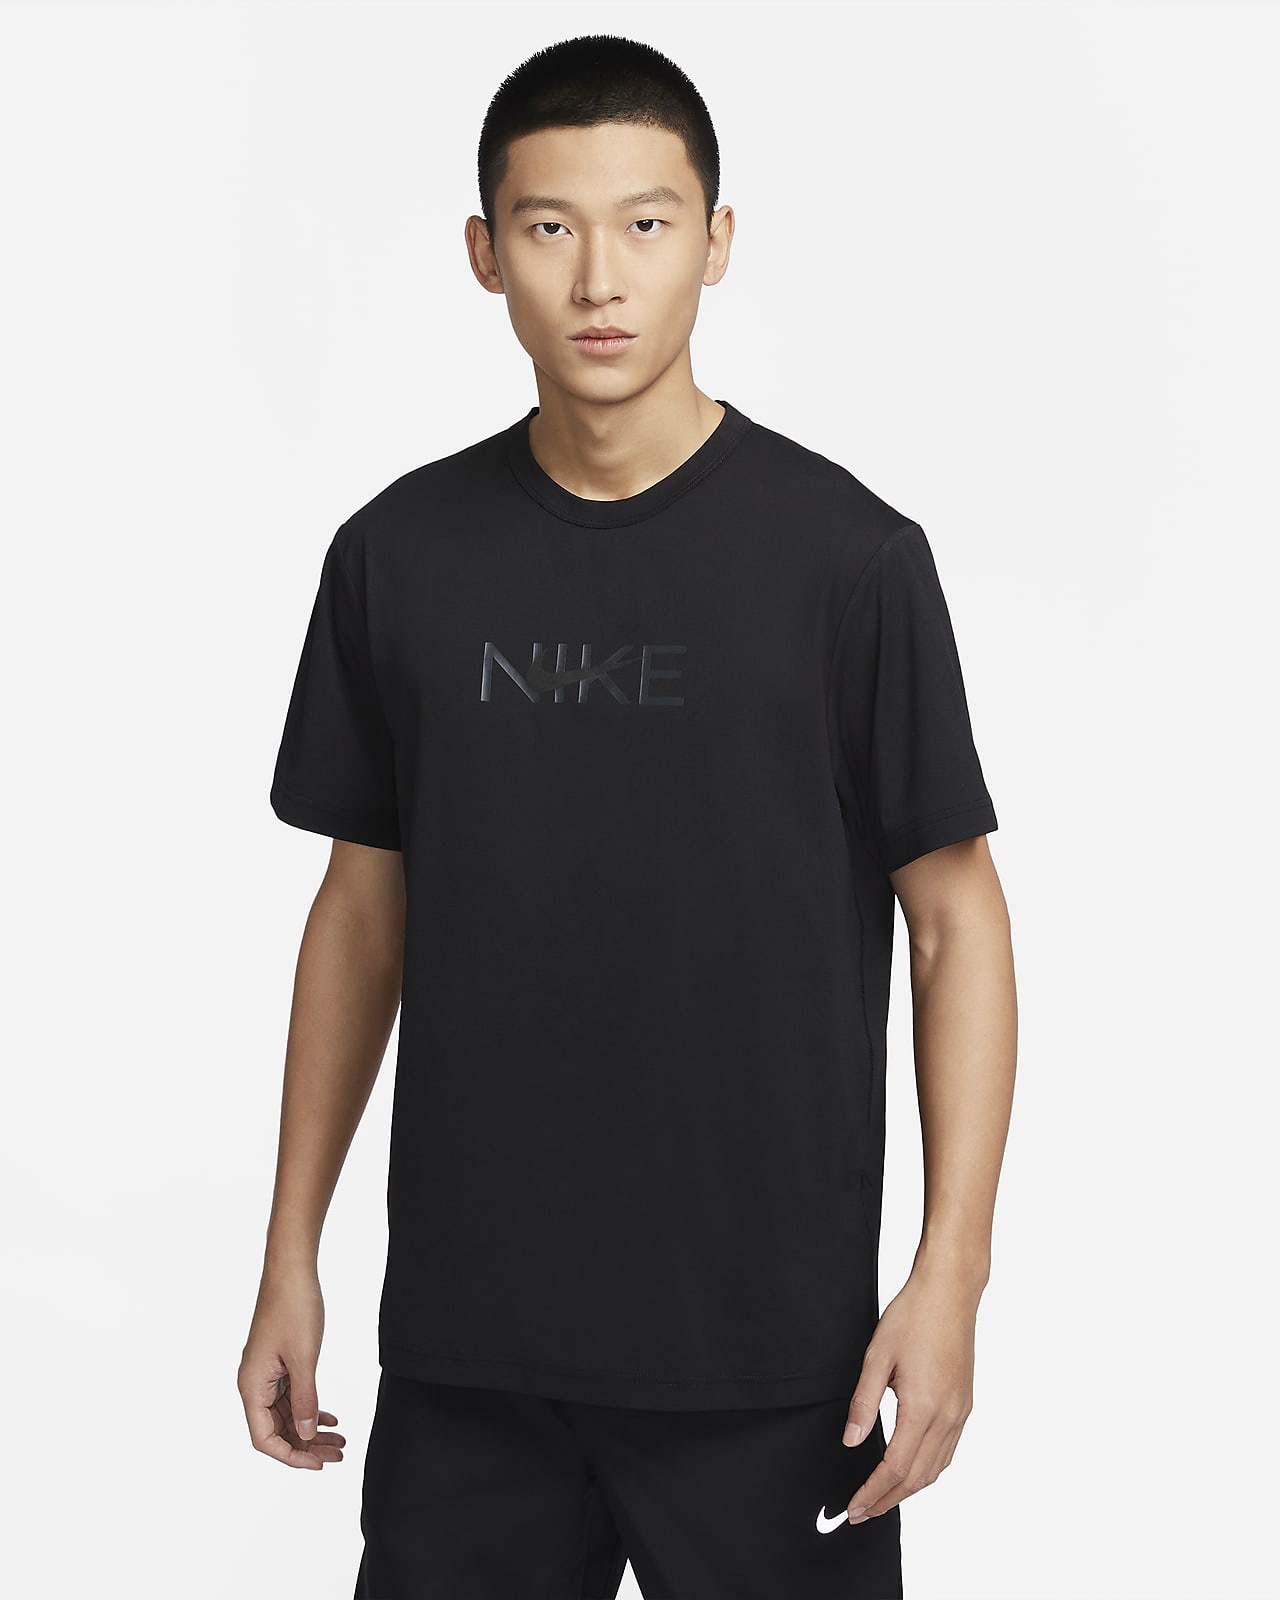 Nike Hyverse Men's Dri-FIT UV Protection Short-Sleeve Fitness Top